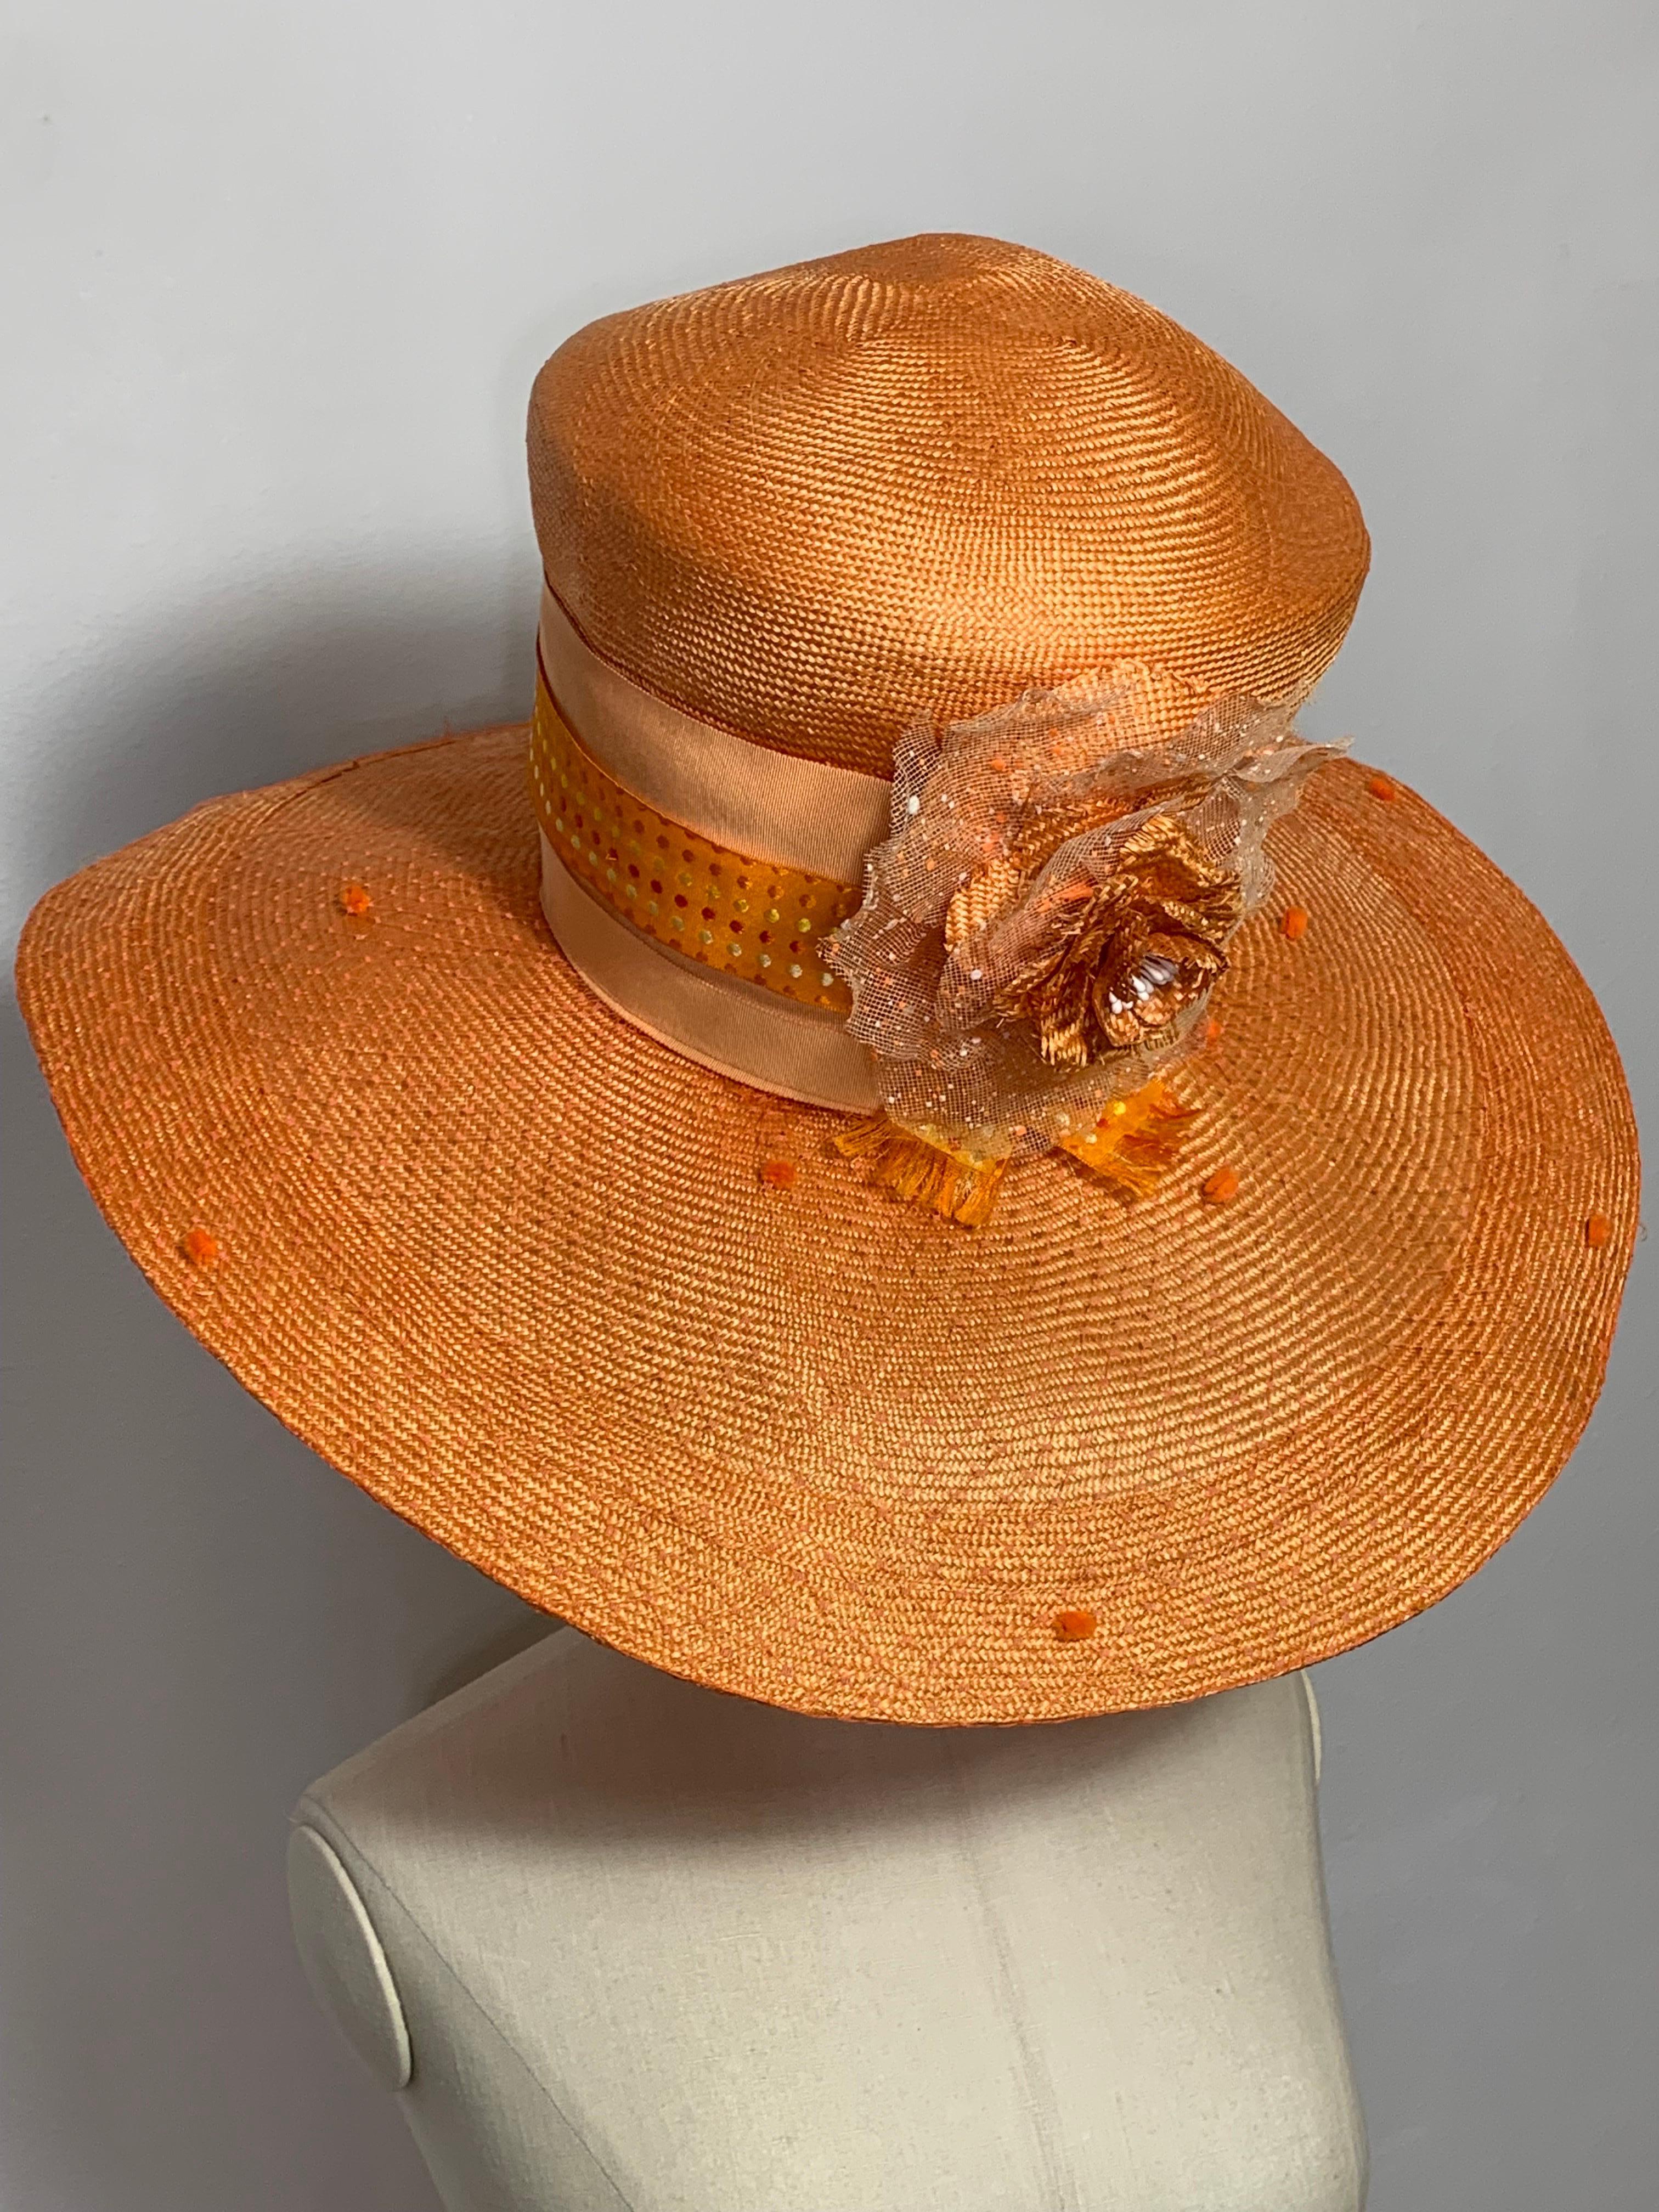 Custom Made Tangerine Straw Wide Brim Hat w Flower Embellishment and Veiled Brim For Sale 5